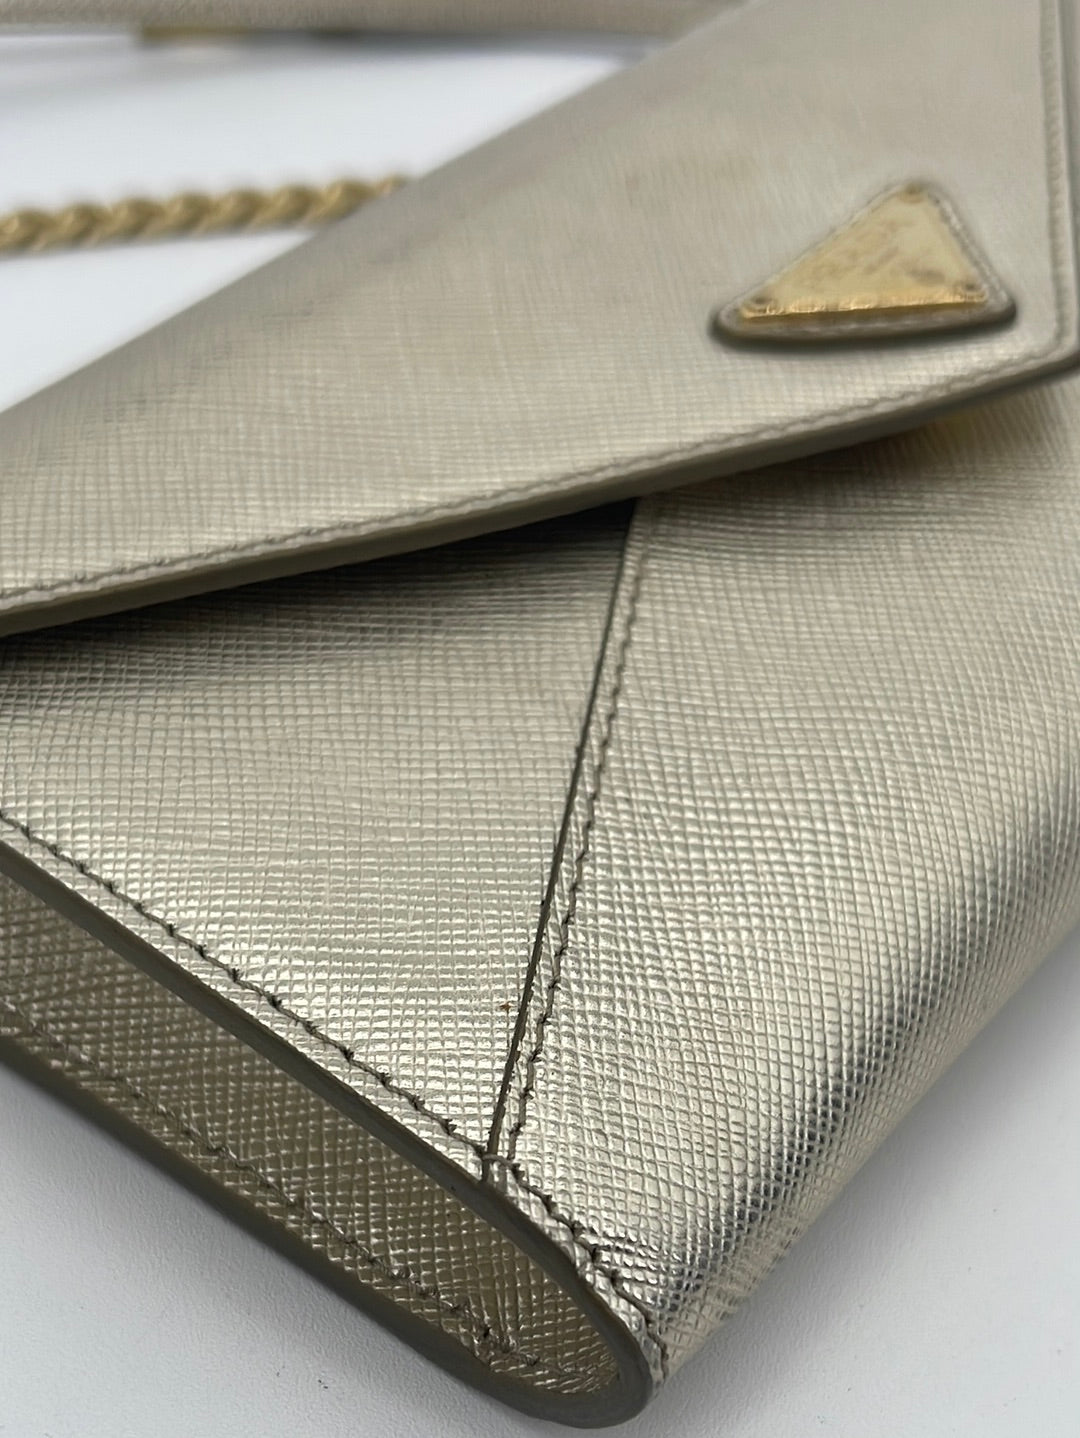 Prada Small Saffiano Leather Wallet Cannella Gold Lettering